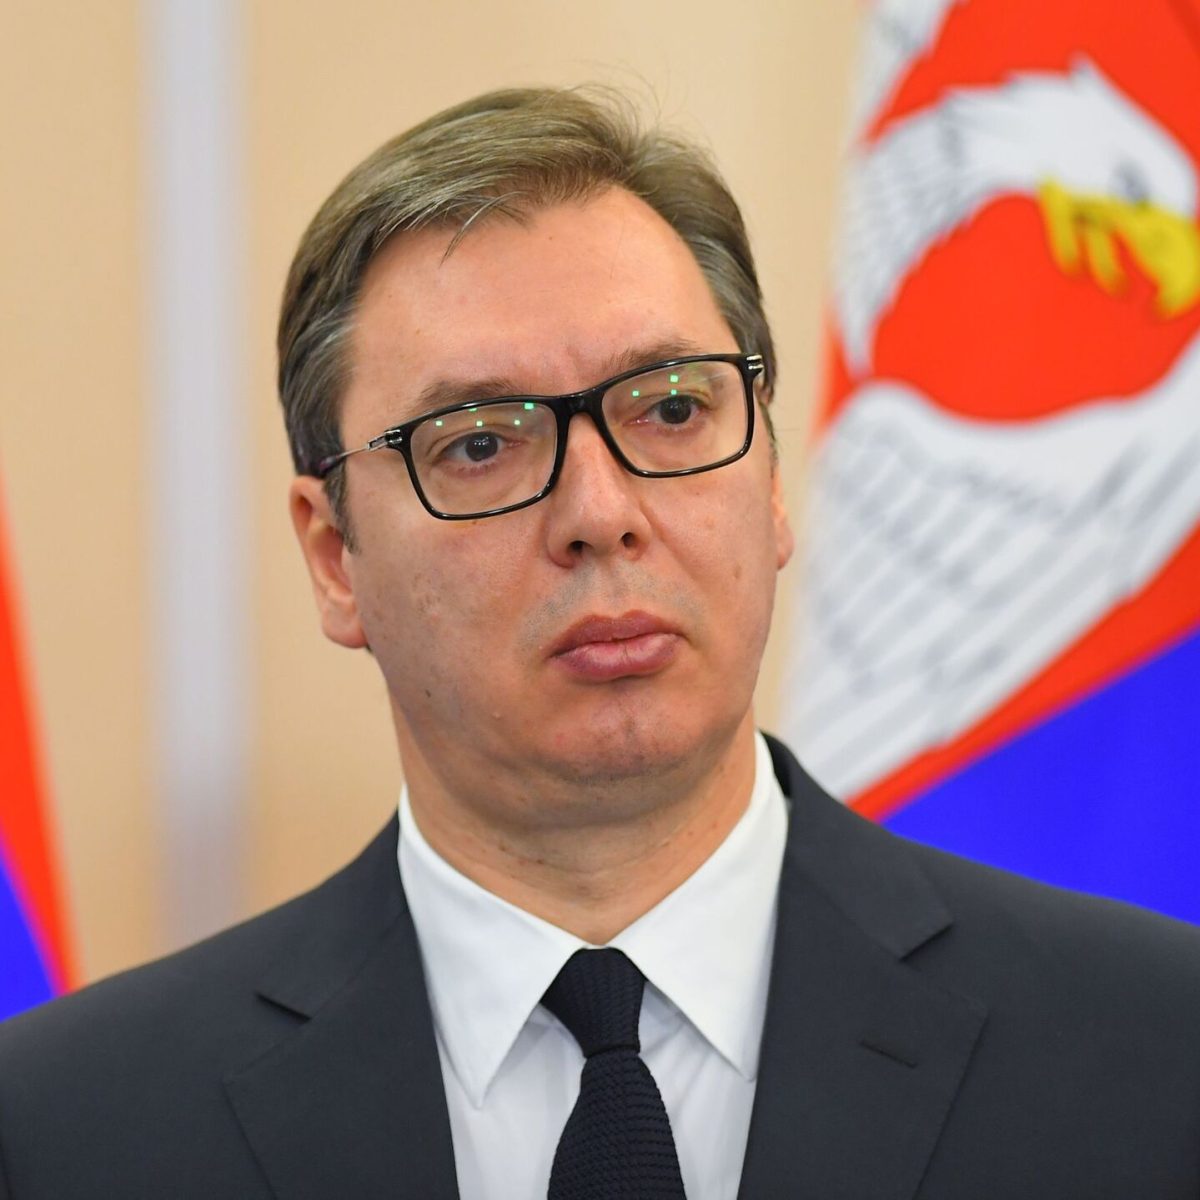 Serbia considera orden de CPI contra Putin tendrá “malas consecuencias para vidas humanas”